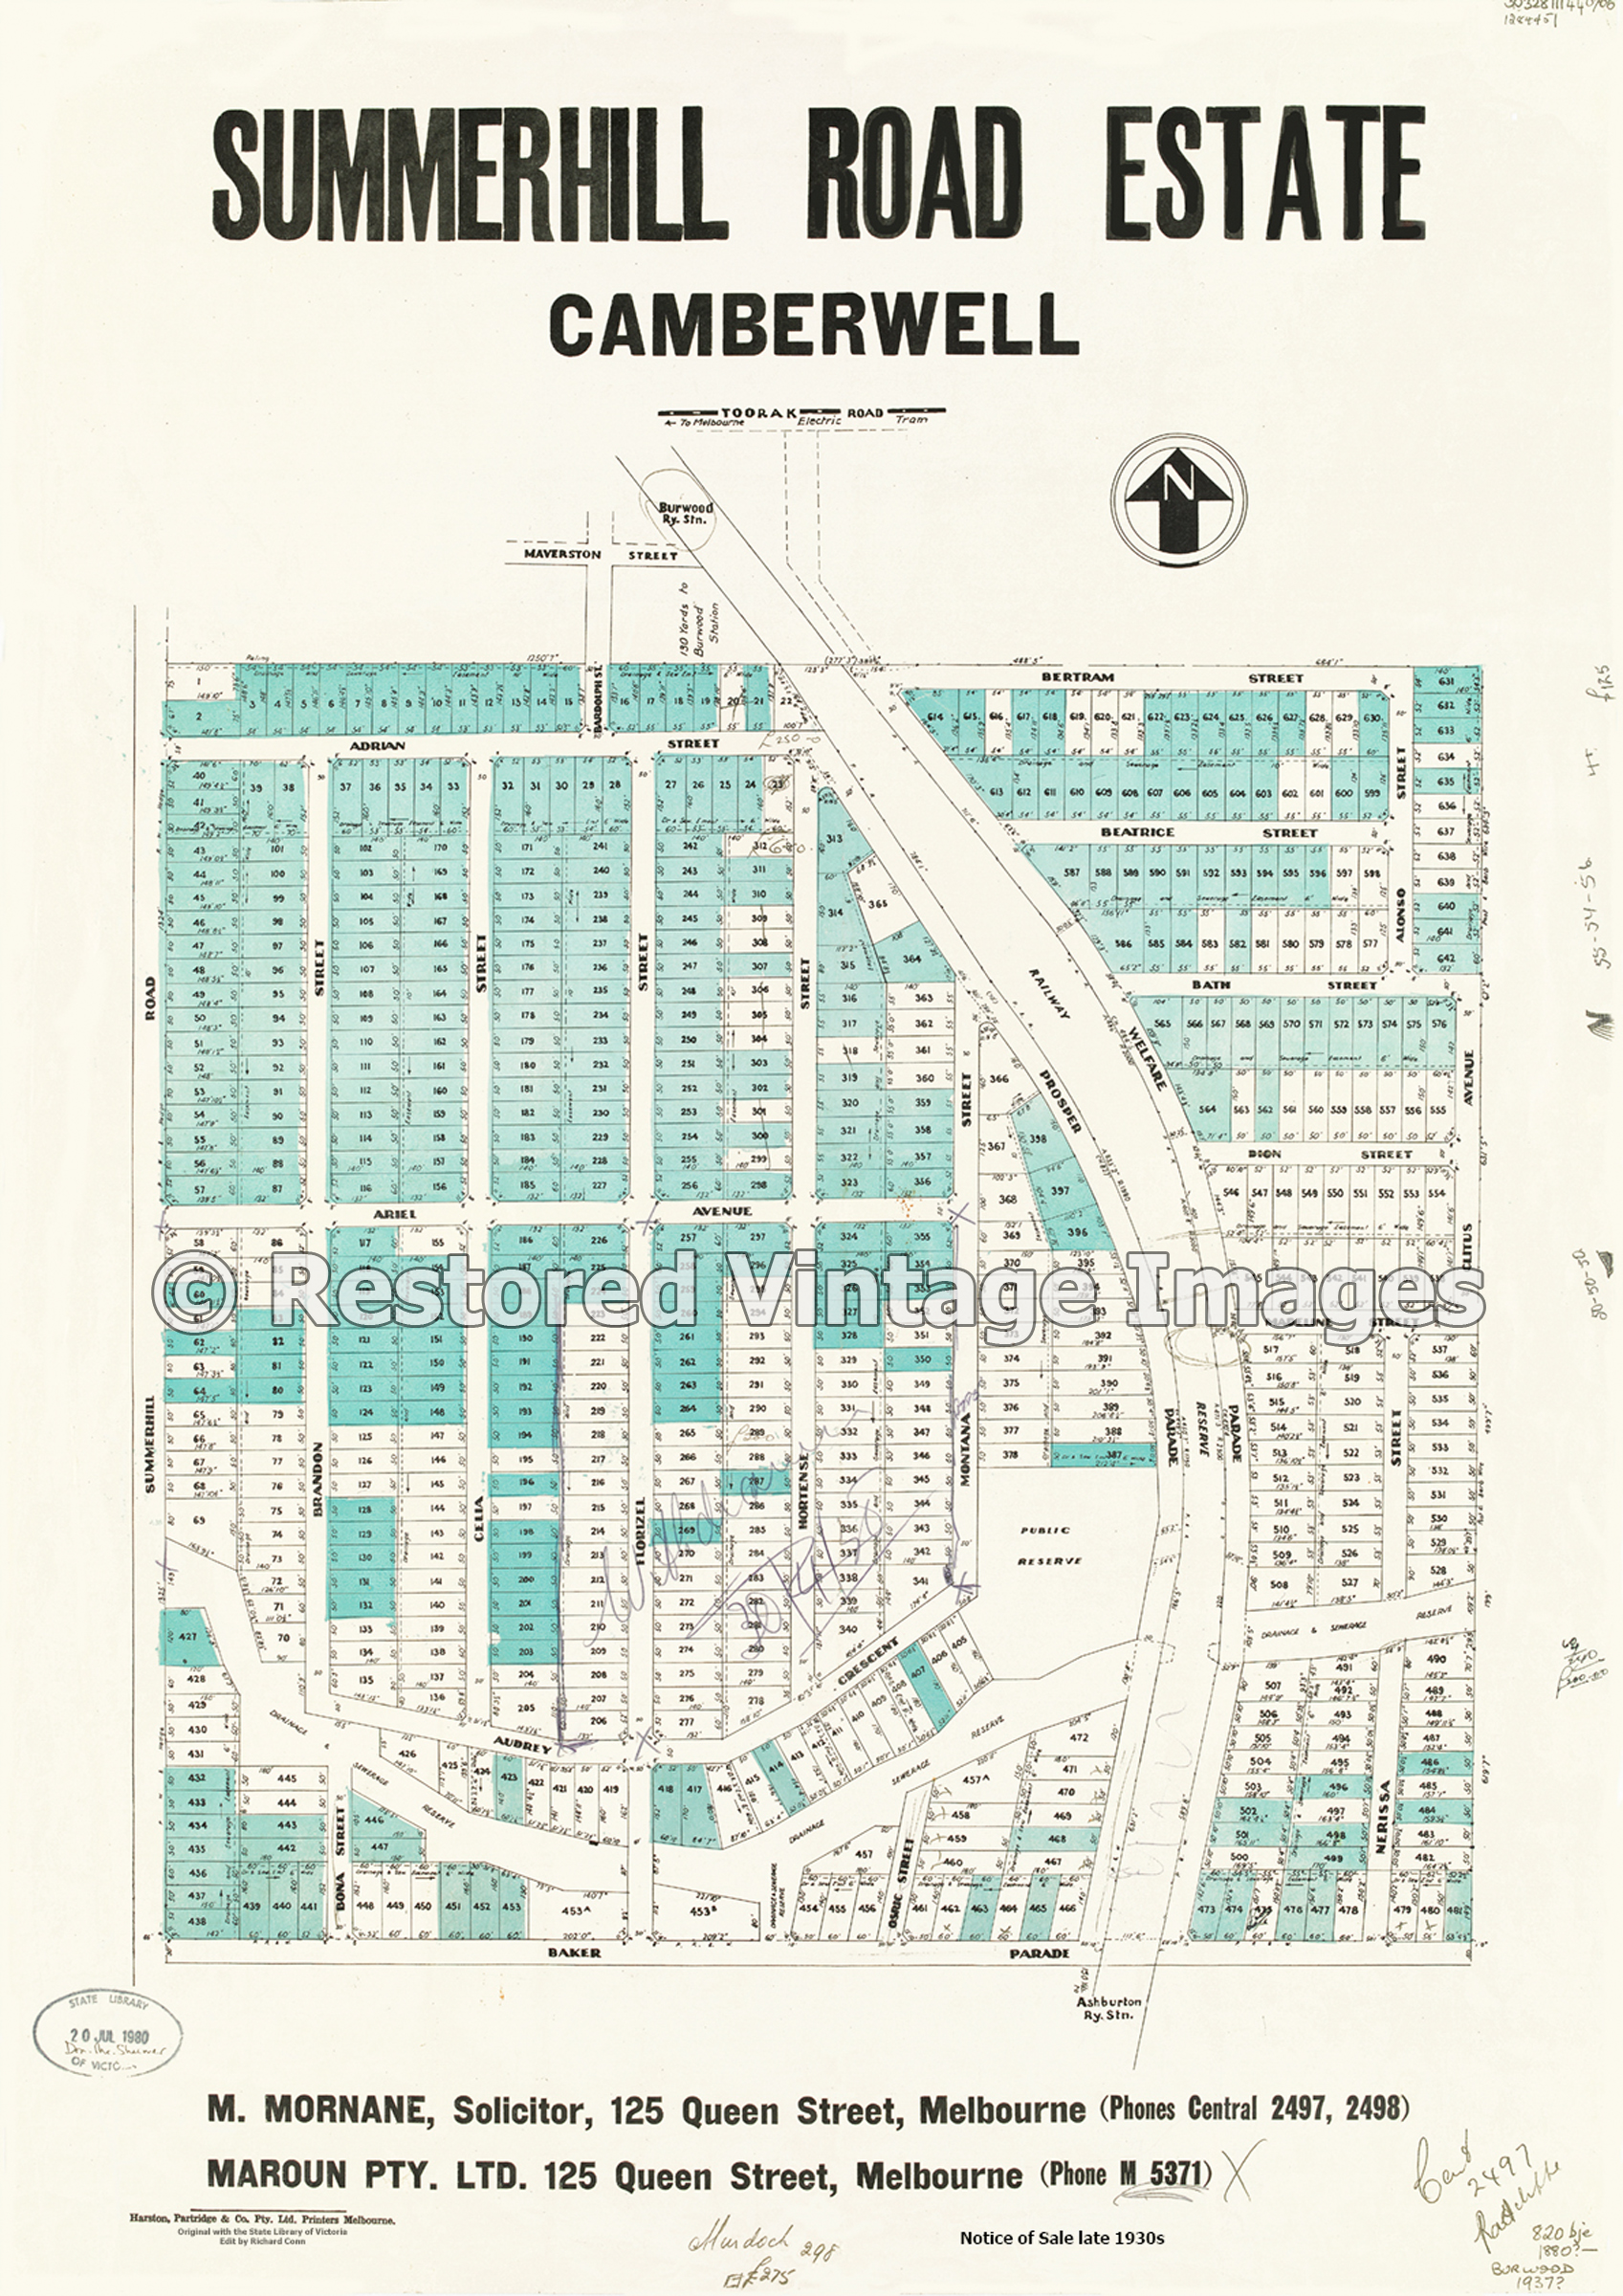 Summerhill Road Estate Camberwell 1930s – Glen Iris